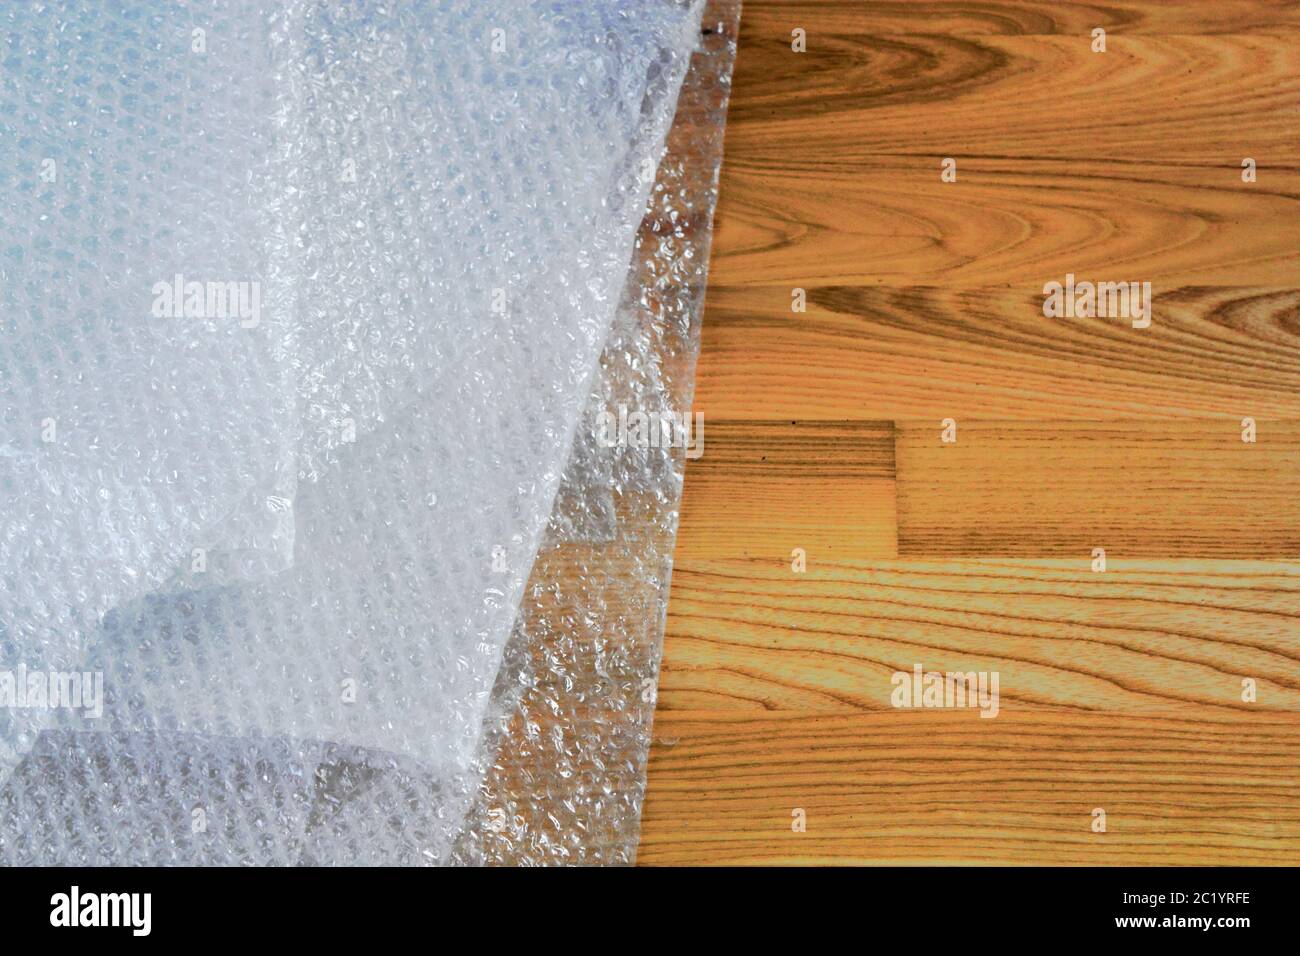 Bubble wrap on wooden floor Stock Photo